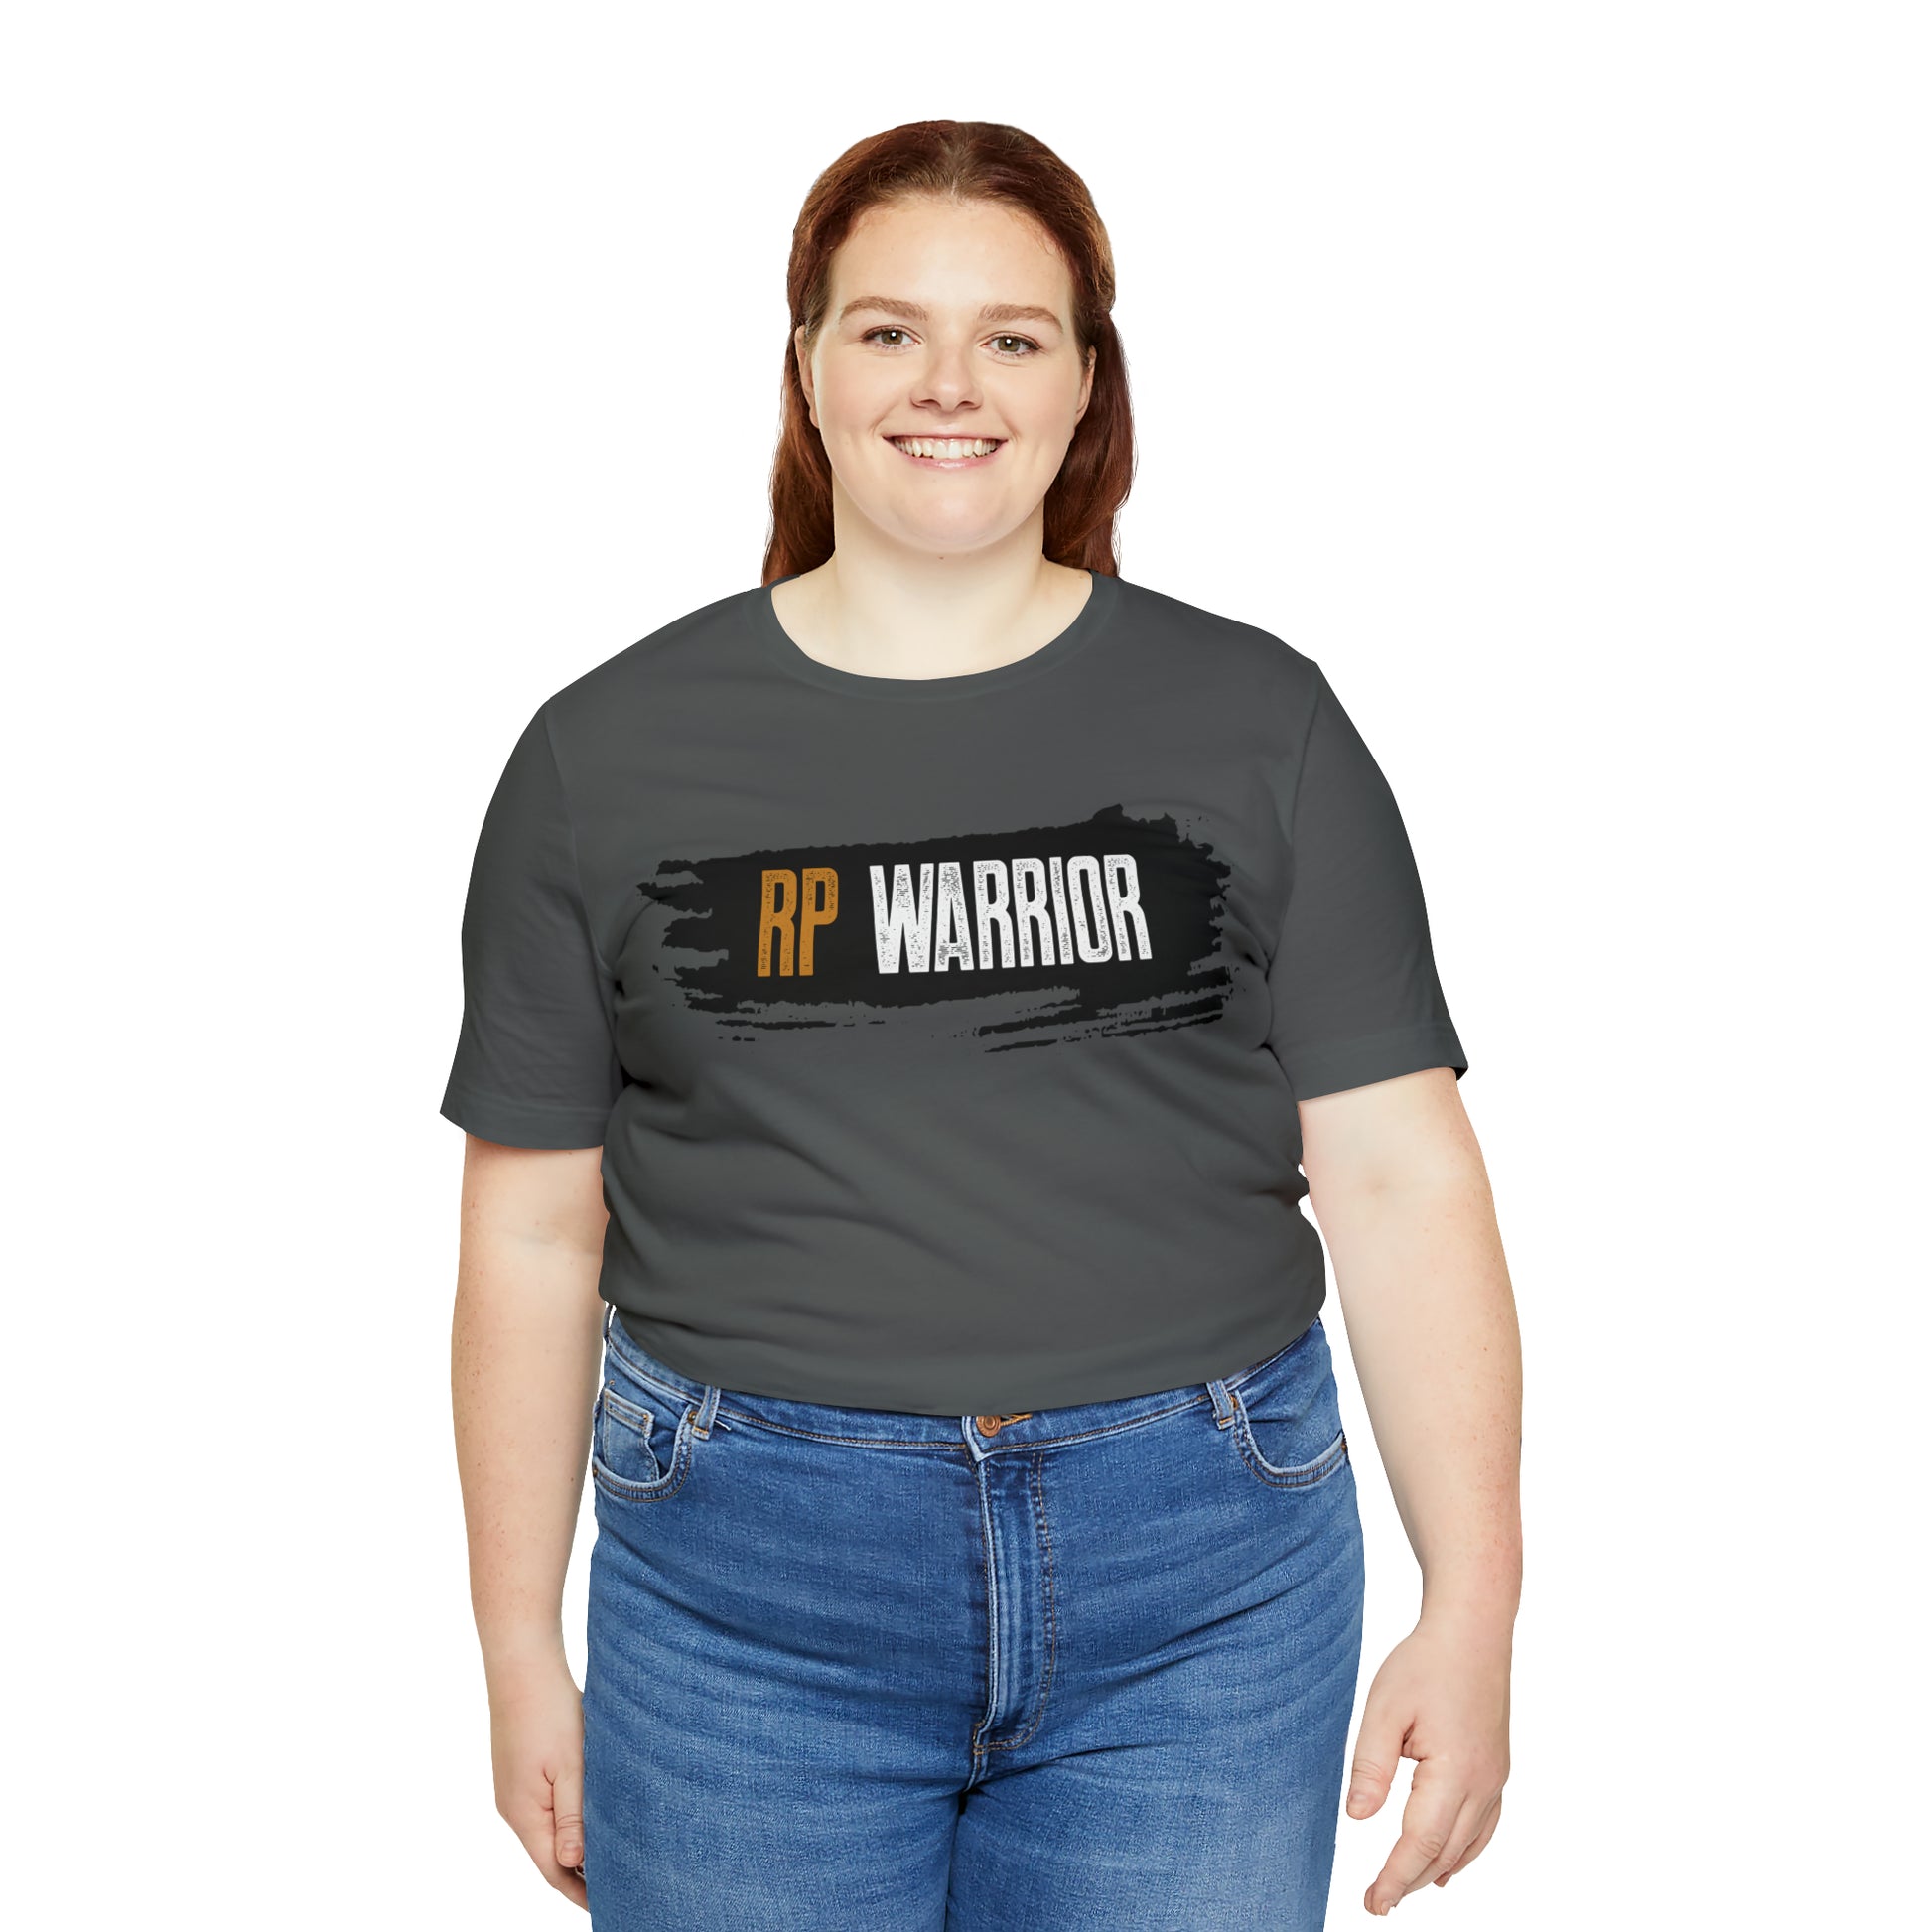 RP Warrior w/ black paint marks- Unisex Jersey Short Sleeve Tee